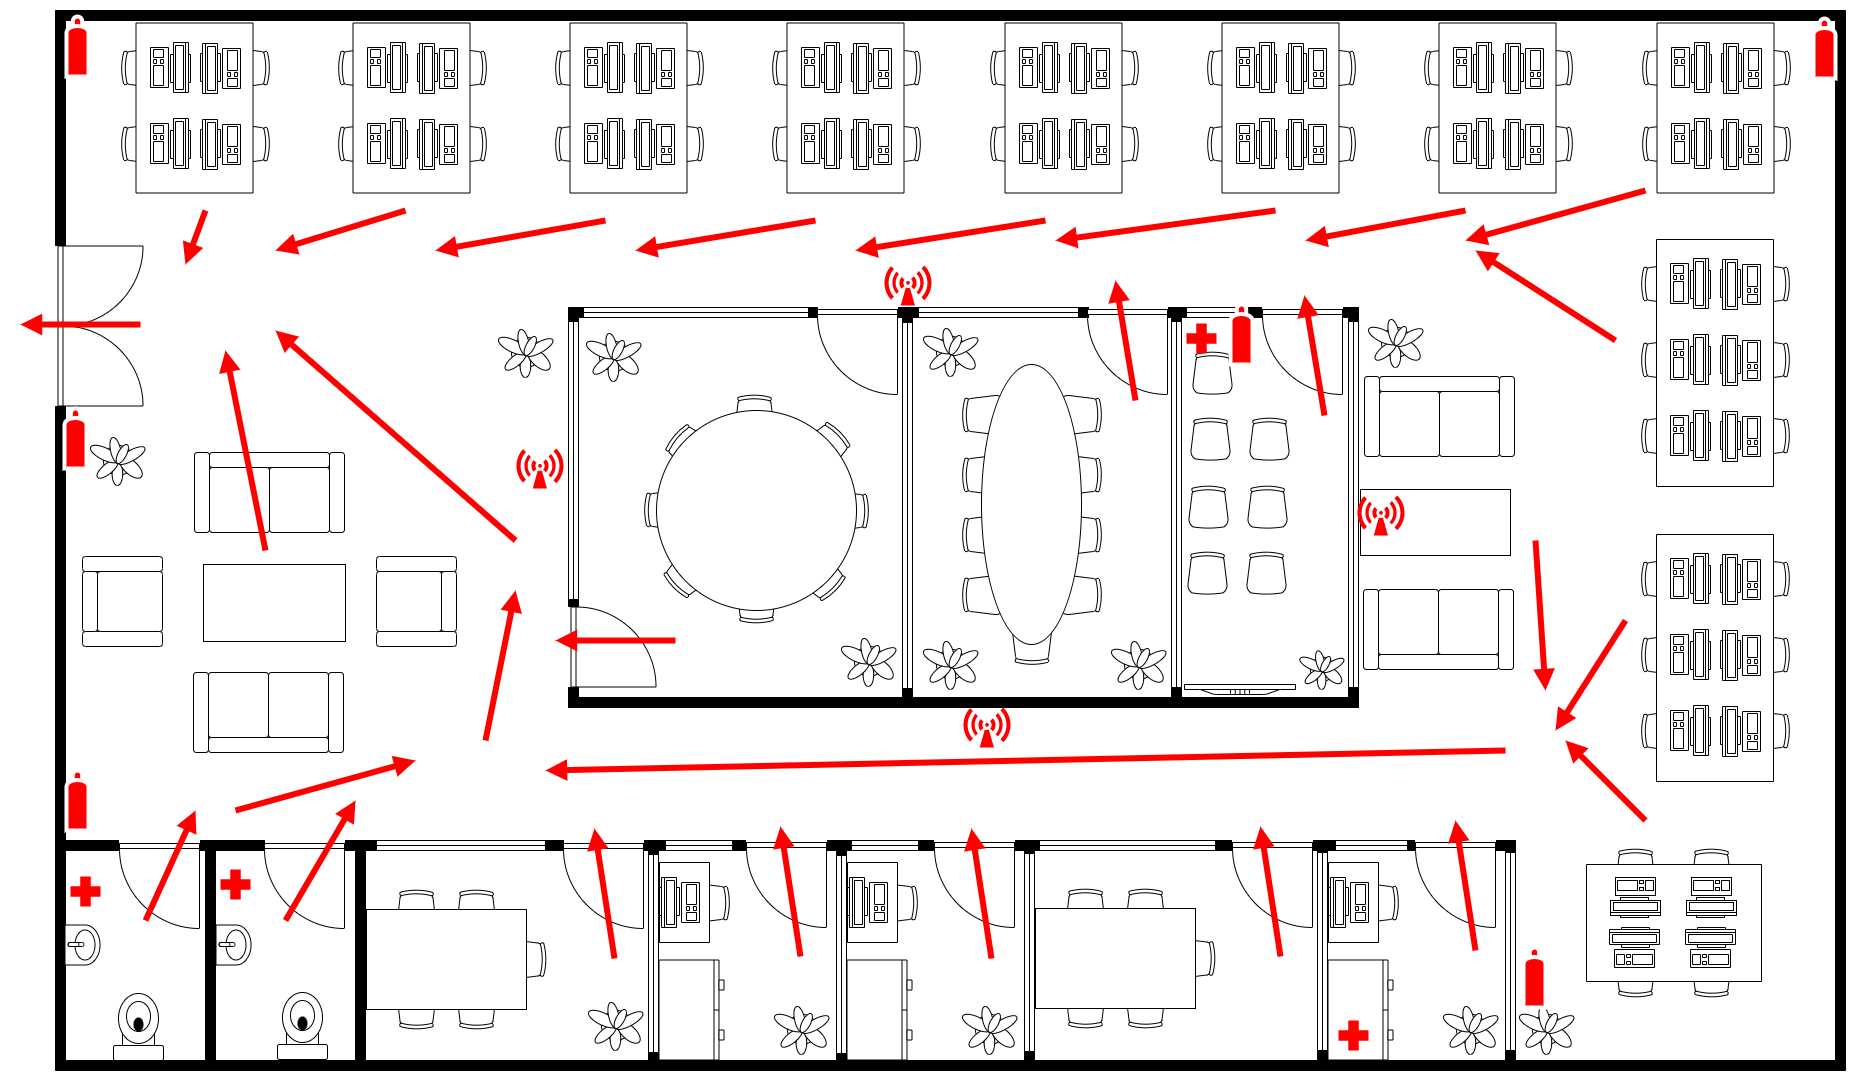 A floorplan created in diagrams.net